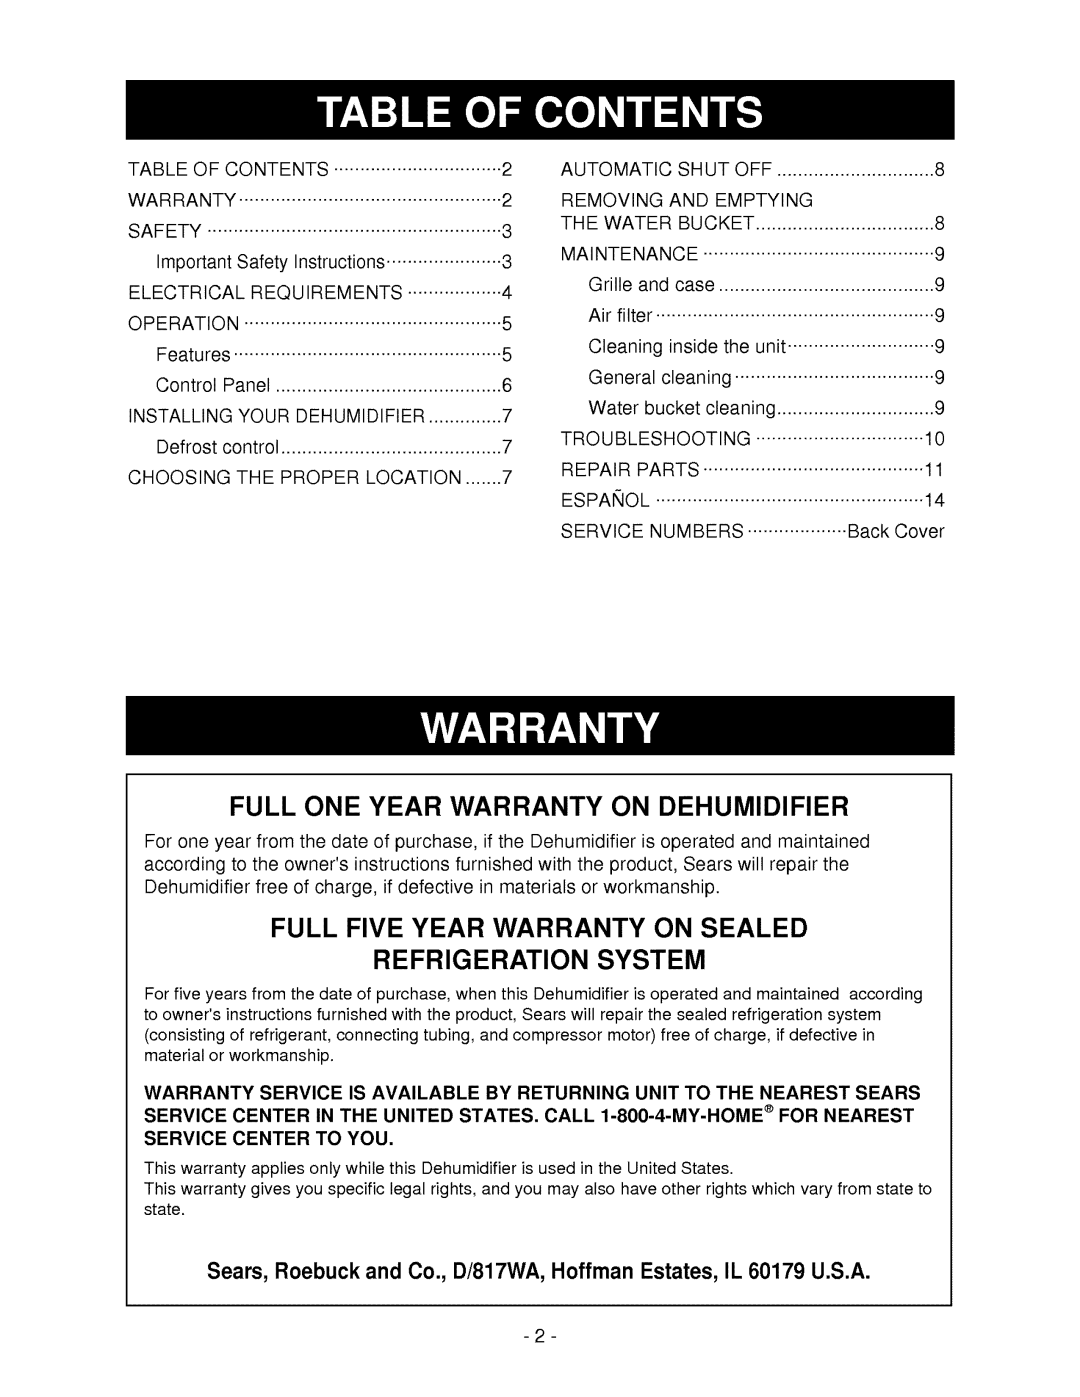 Kenmore 580.5245 Full Five Year Warranty On Sealed, Refrigeration System, Full One Year Warranty On Dehumidifier 